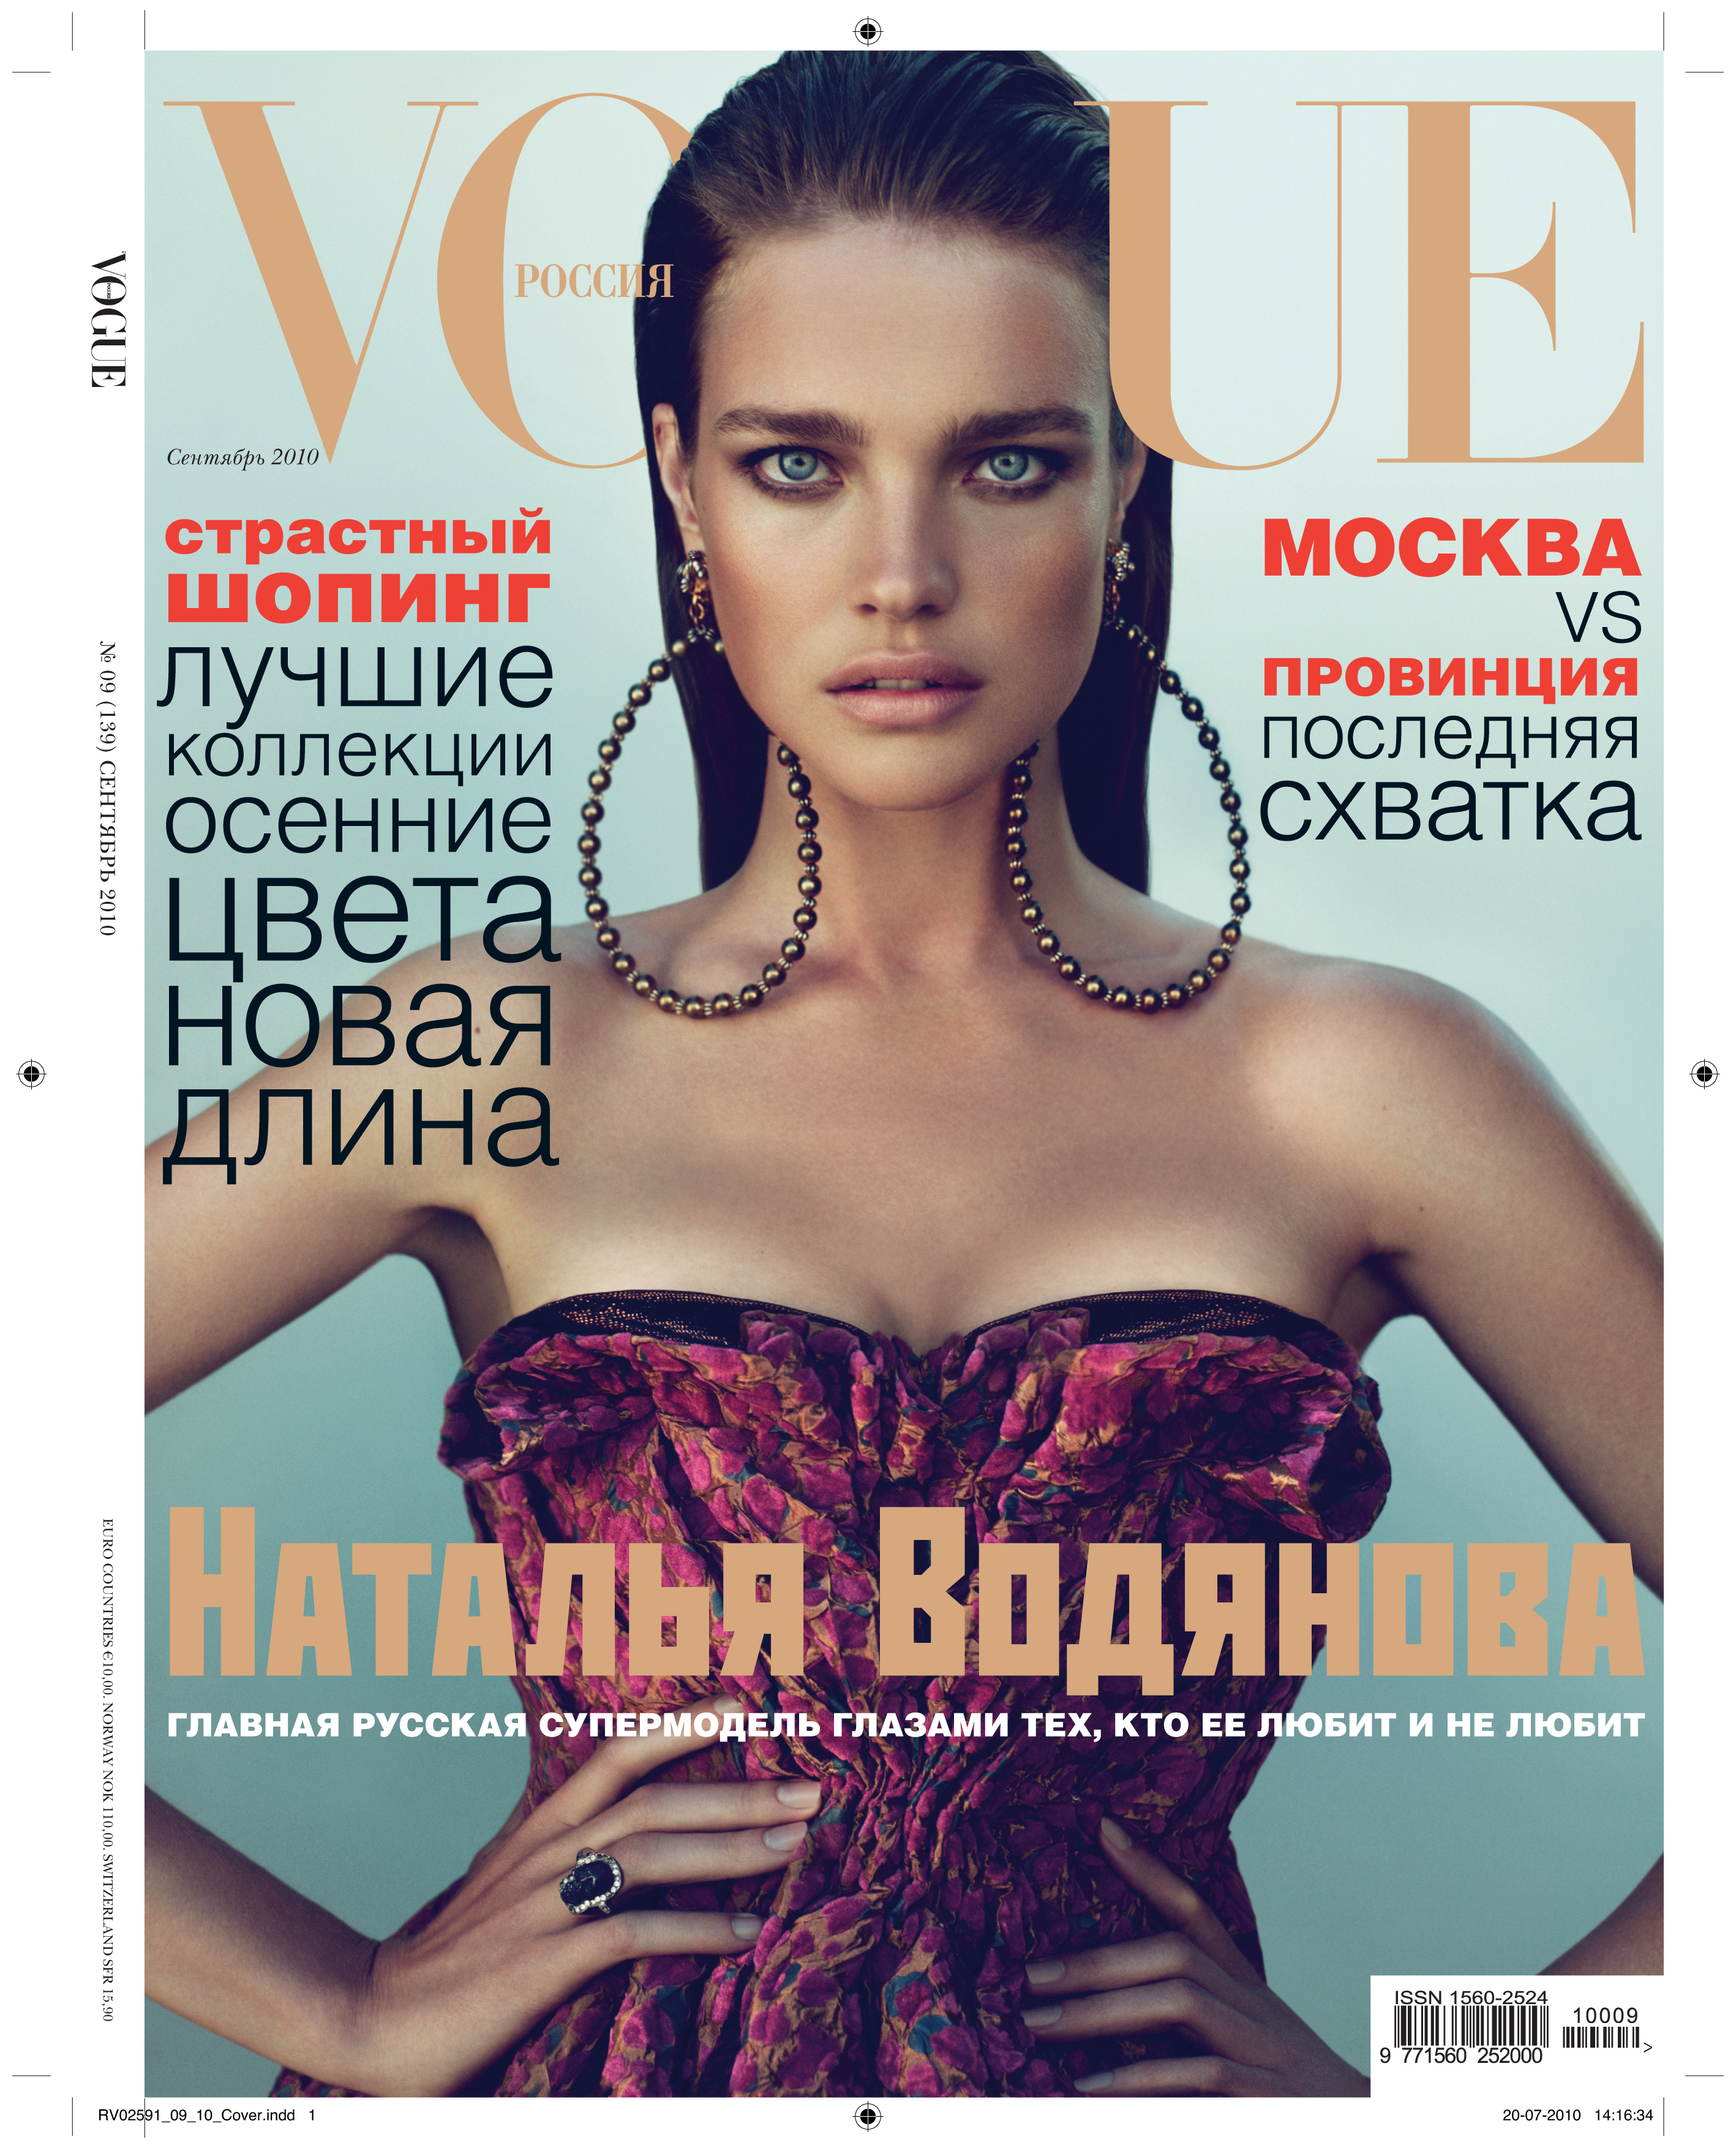 Обложки русских журналов. Вог Наташа Водянова сентябрь 2010. Водянова на обложке Vogue.